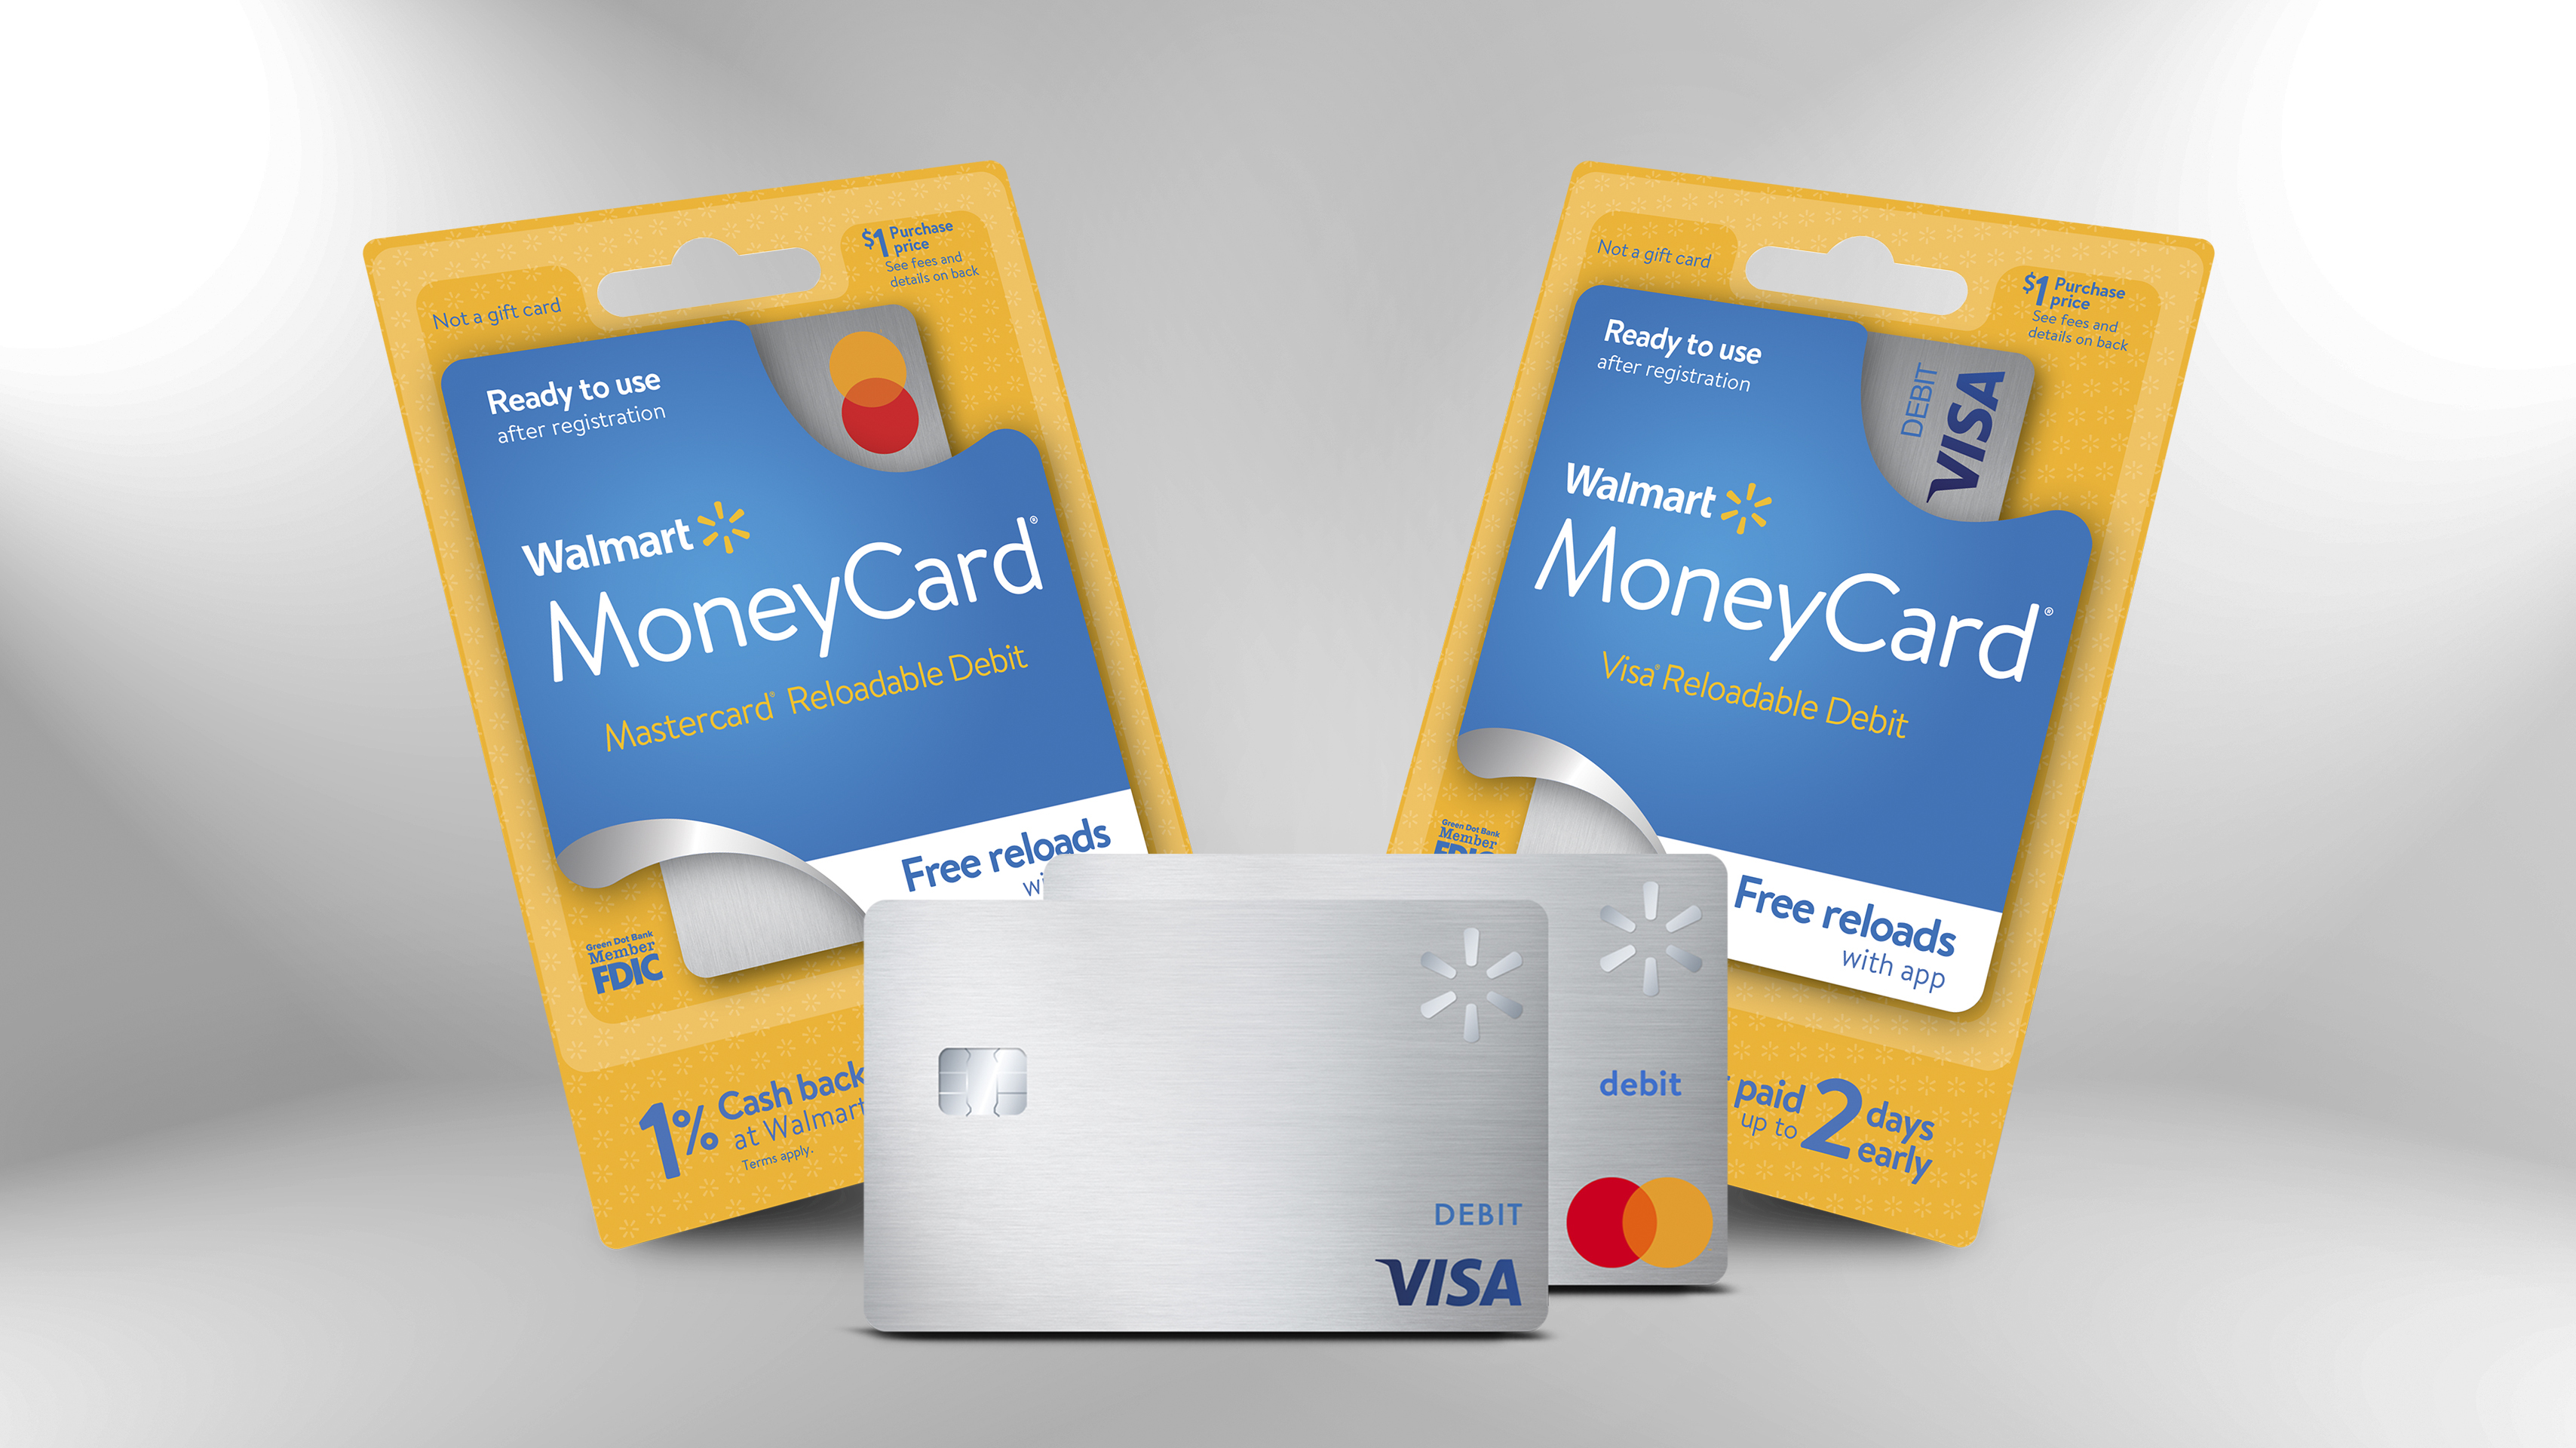 Walmart MoneyCard Adds 2 High Yield Savings Account, Free